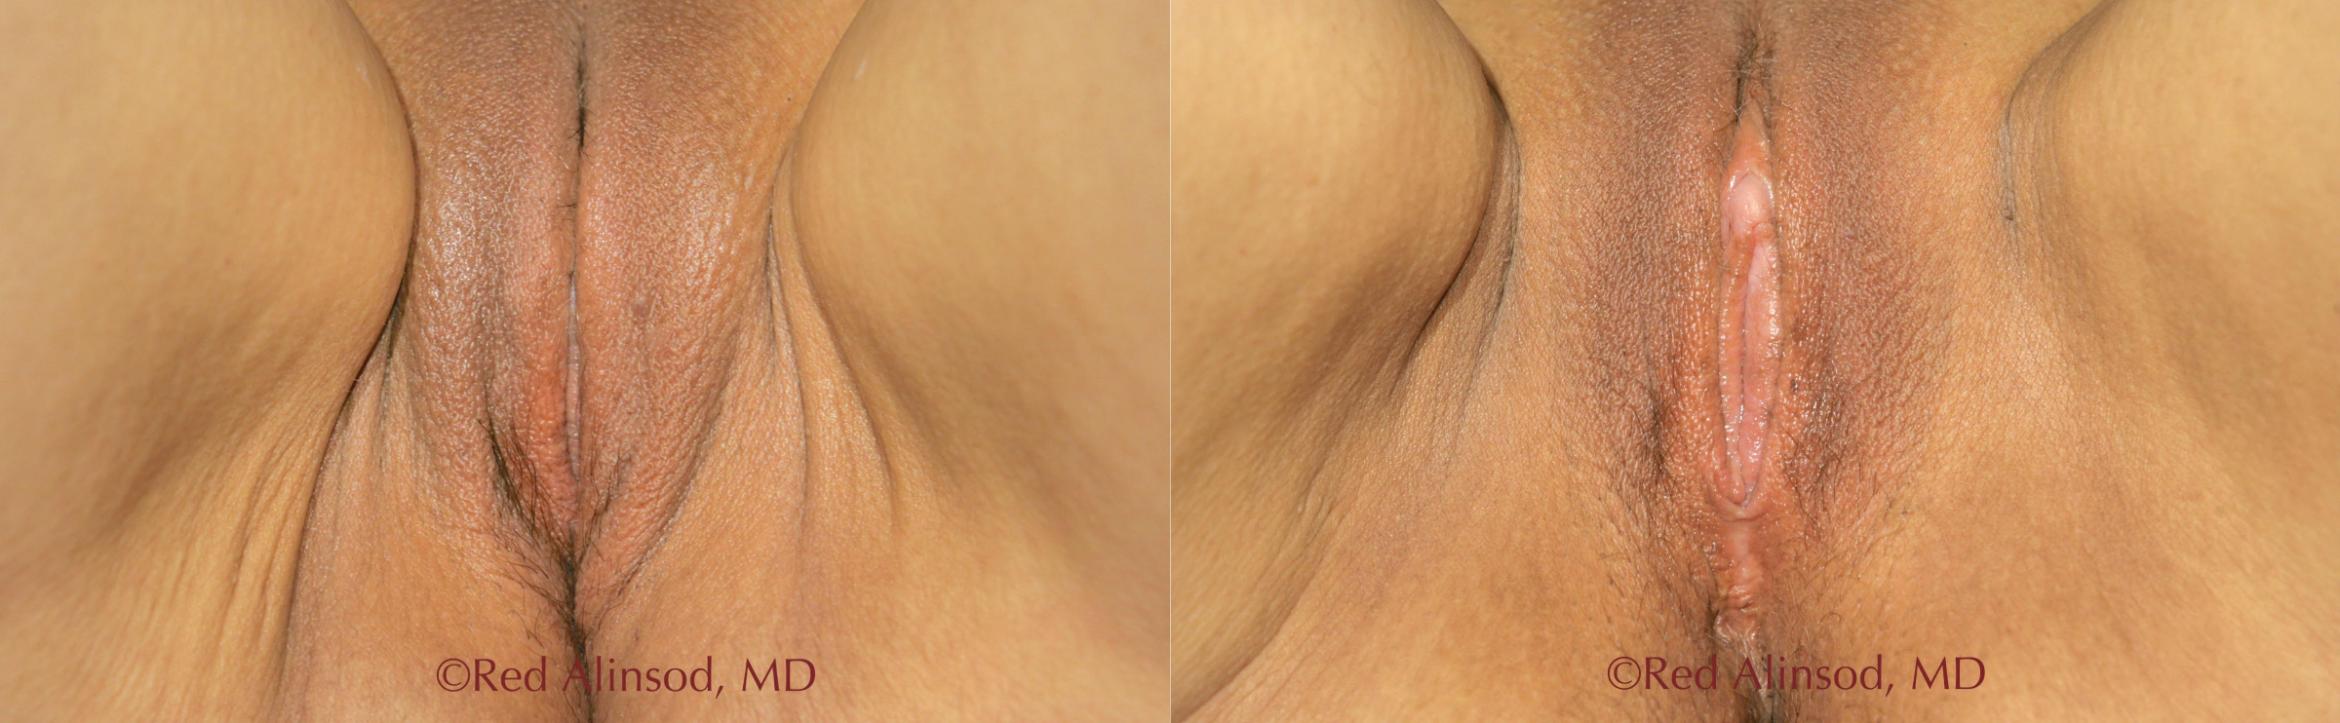 Before & After Vaginal Rejuvenation Case 512 View #1 View in Shreveport, LA